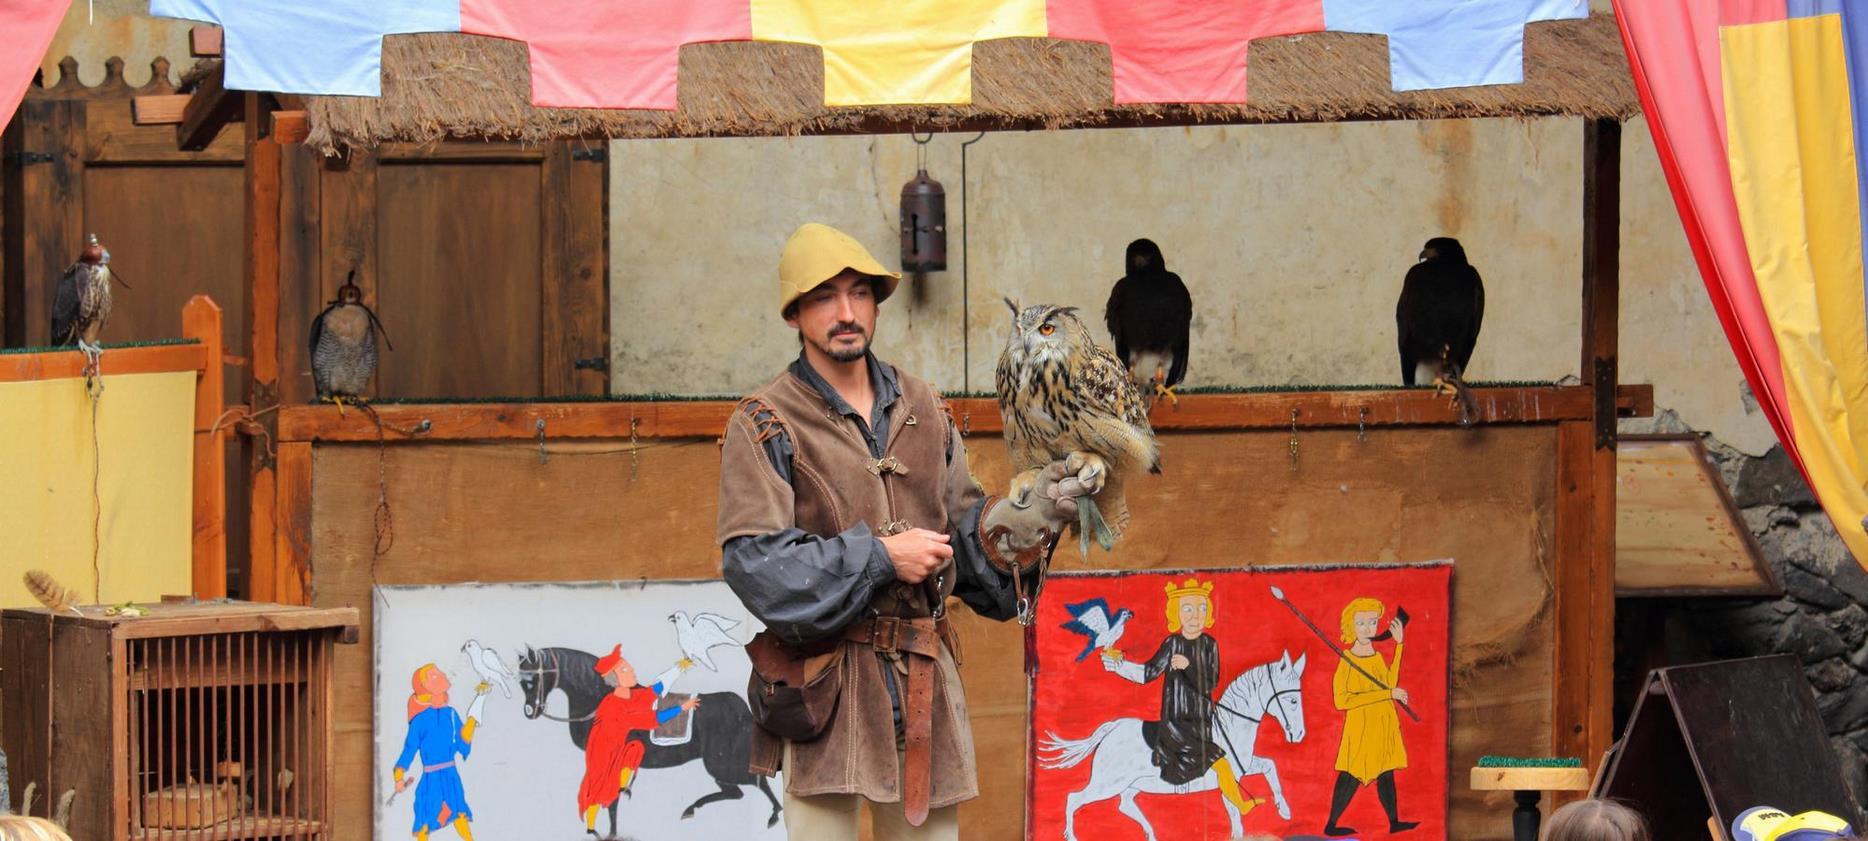 Falconry show at Murol castle